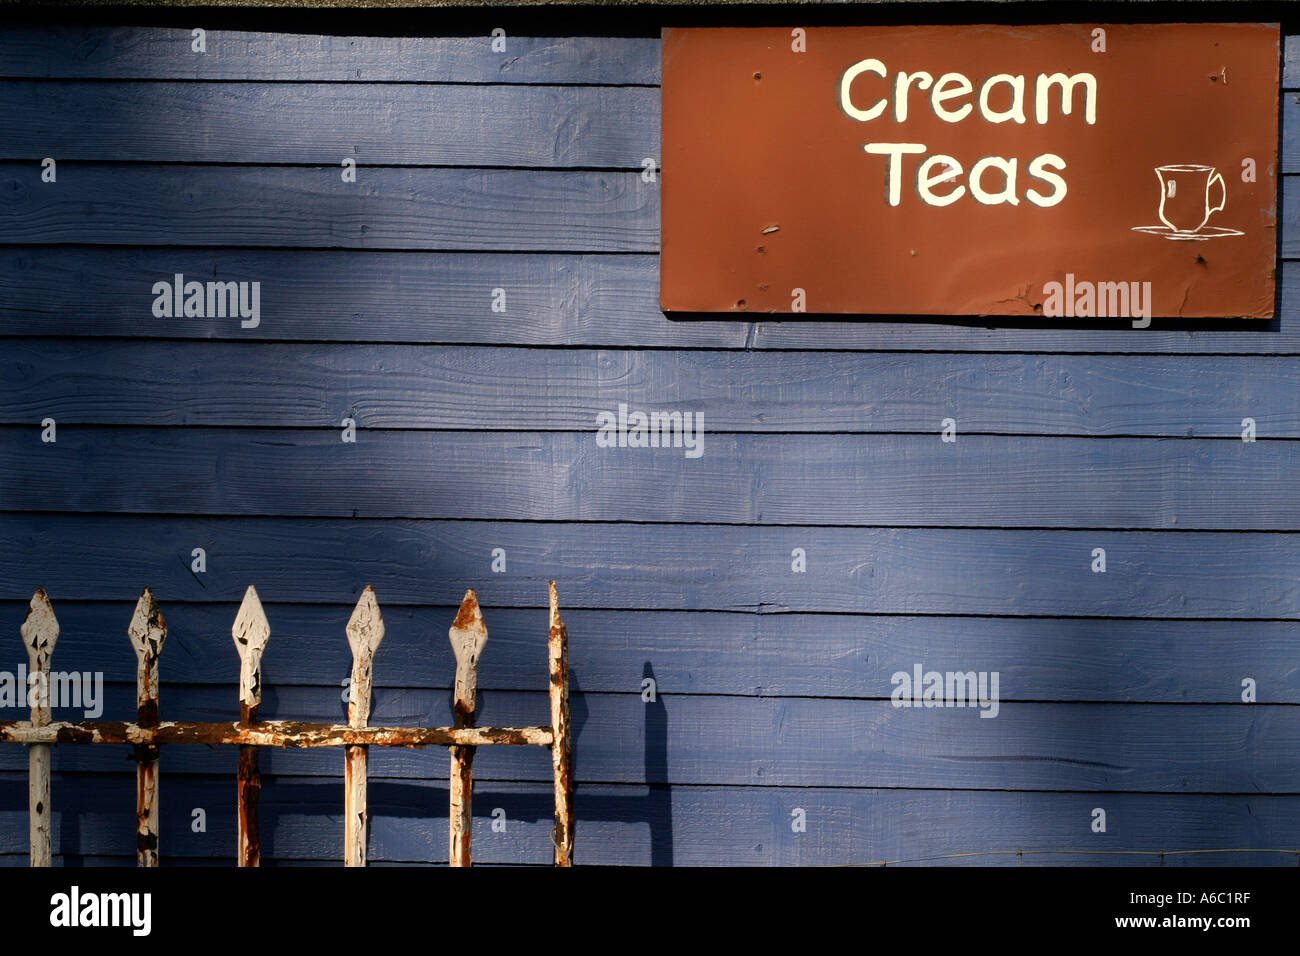 Cream Teas cafe sign Cornwall Stock Photo